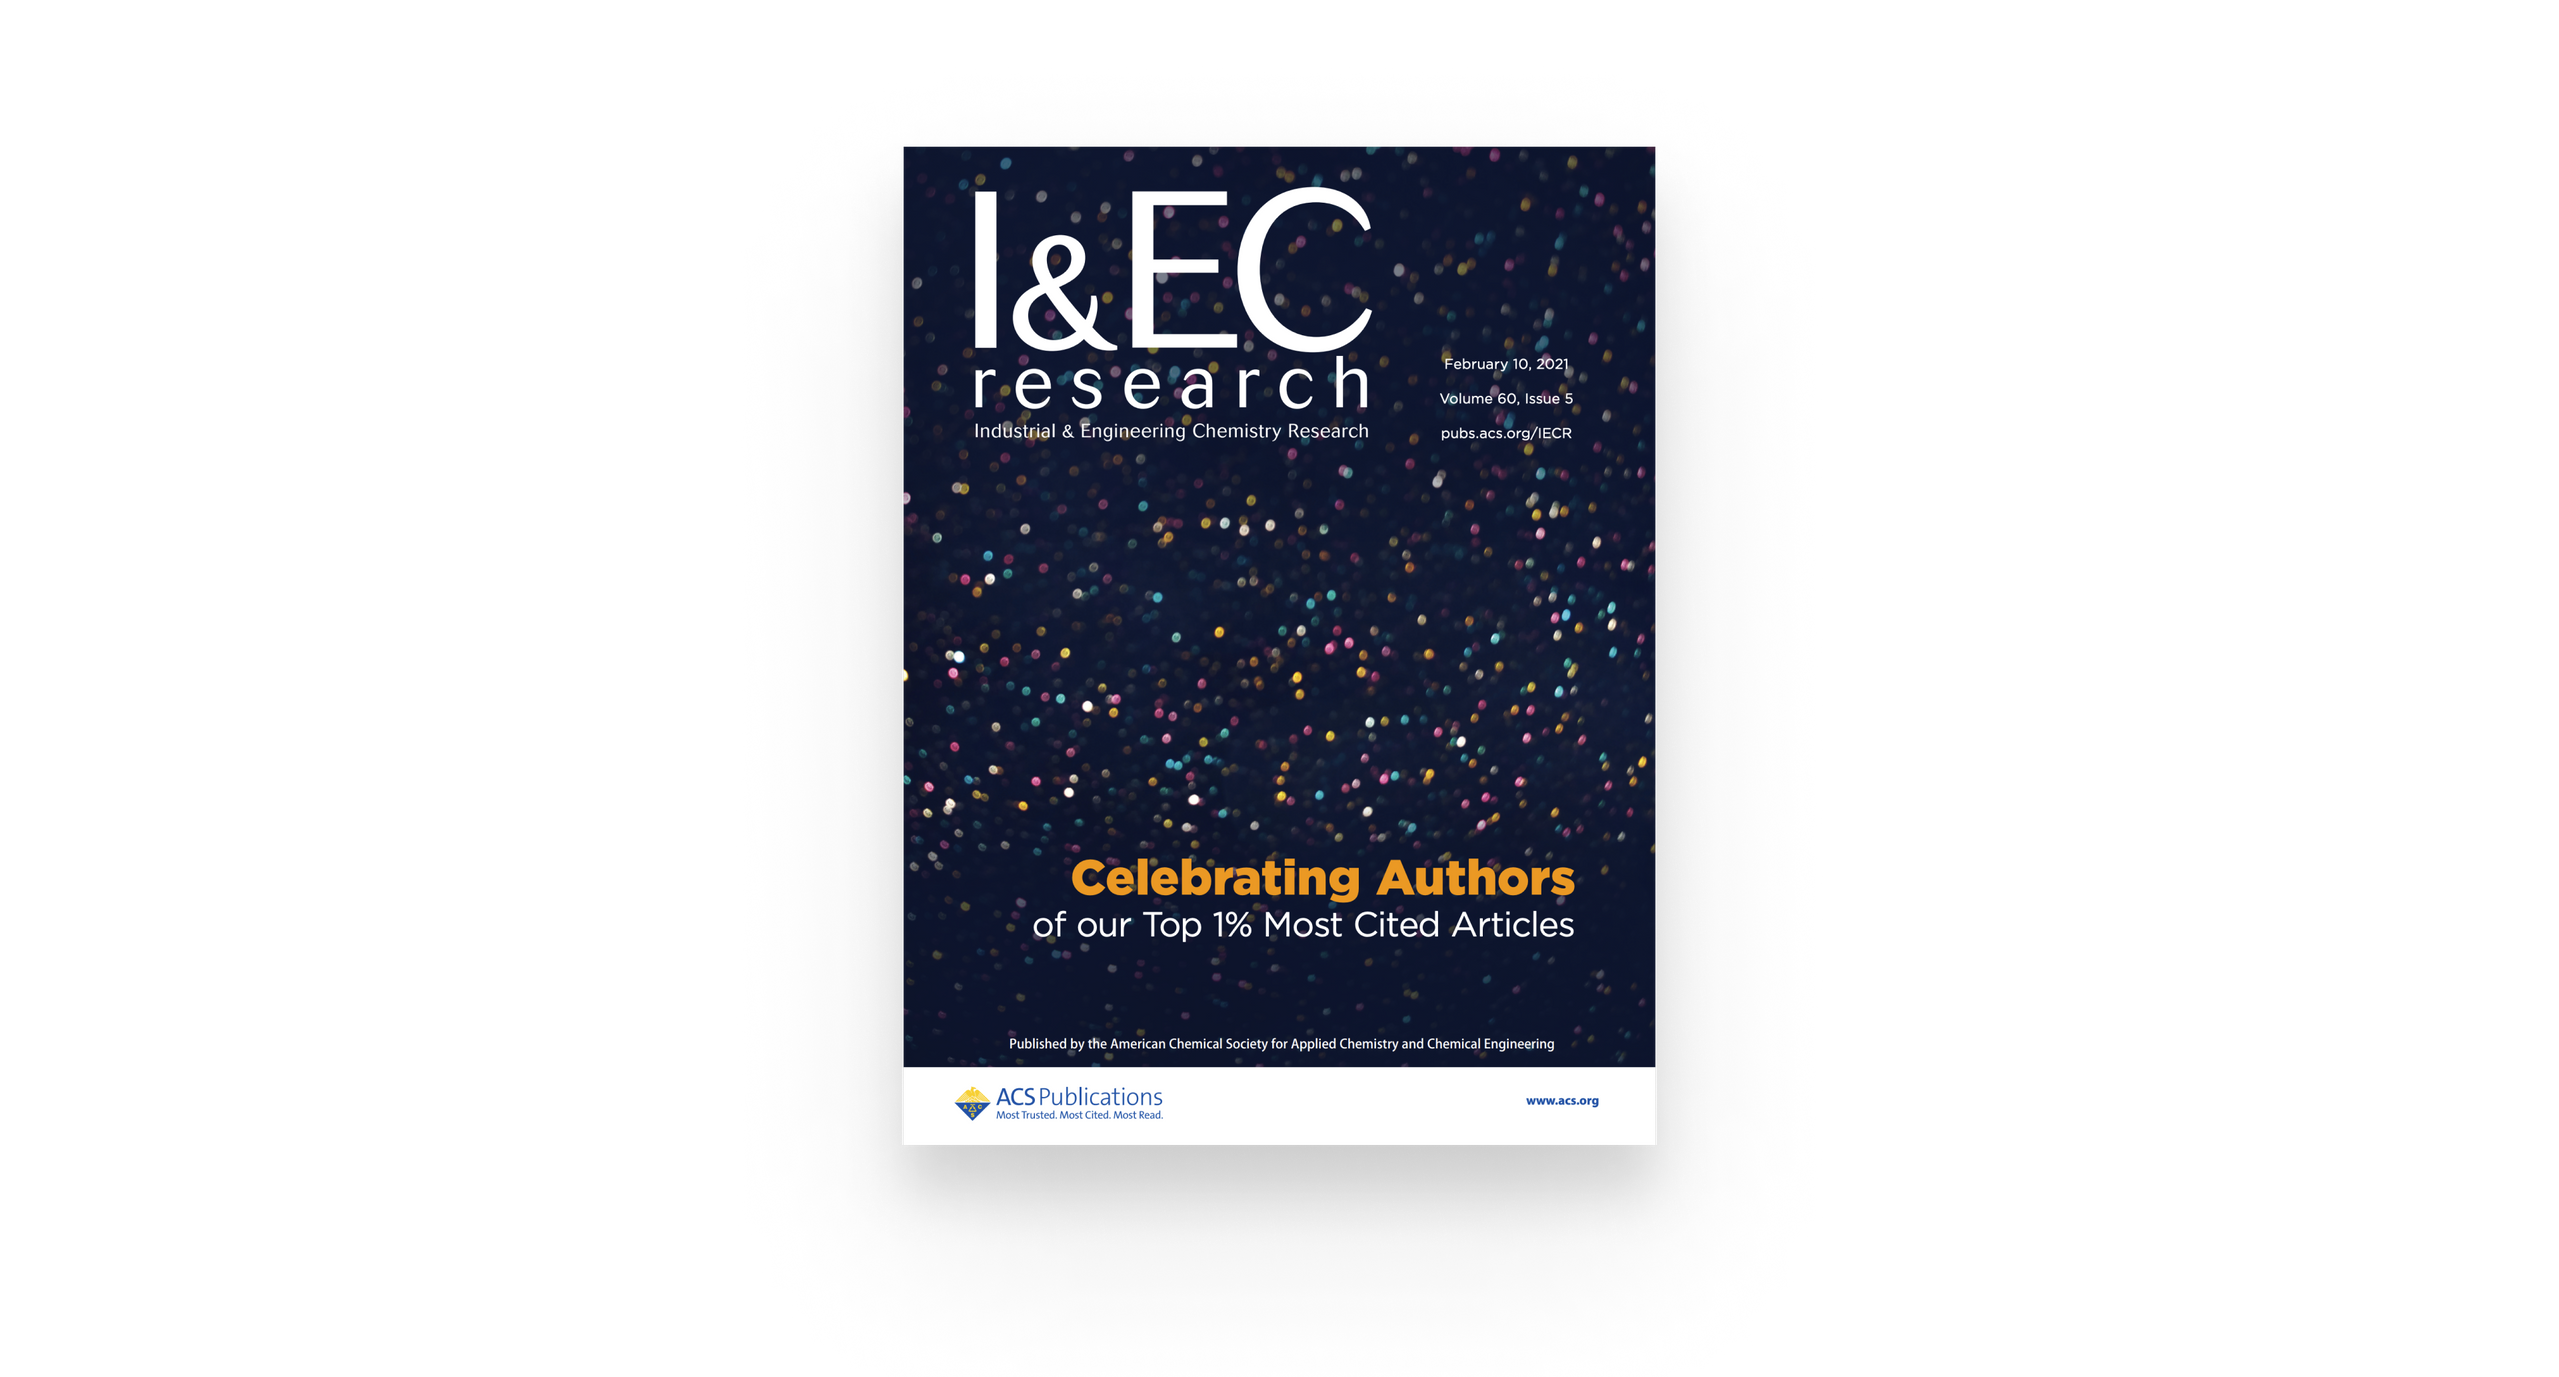 I&EC research cover